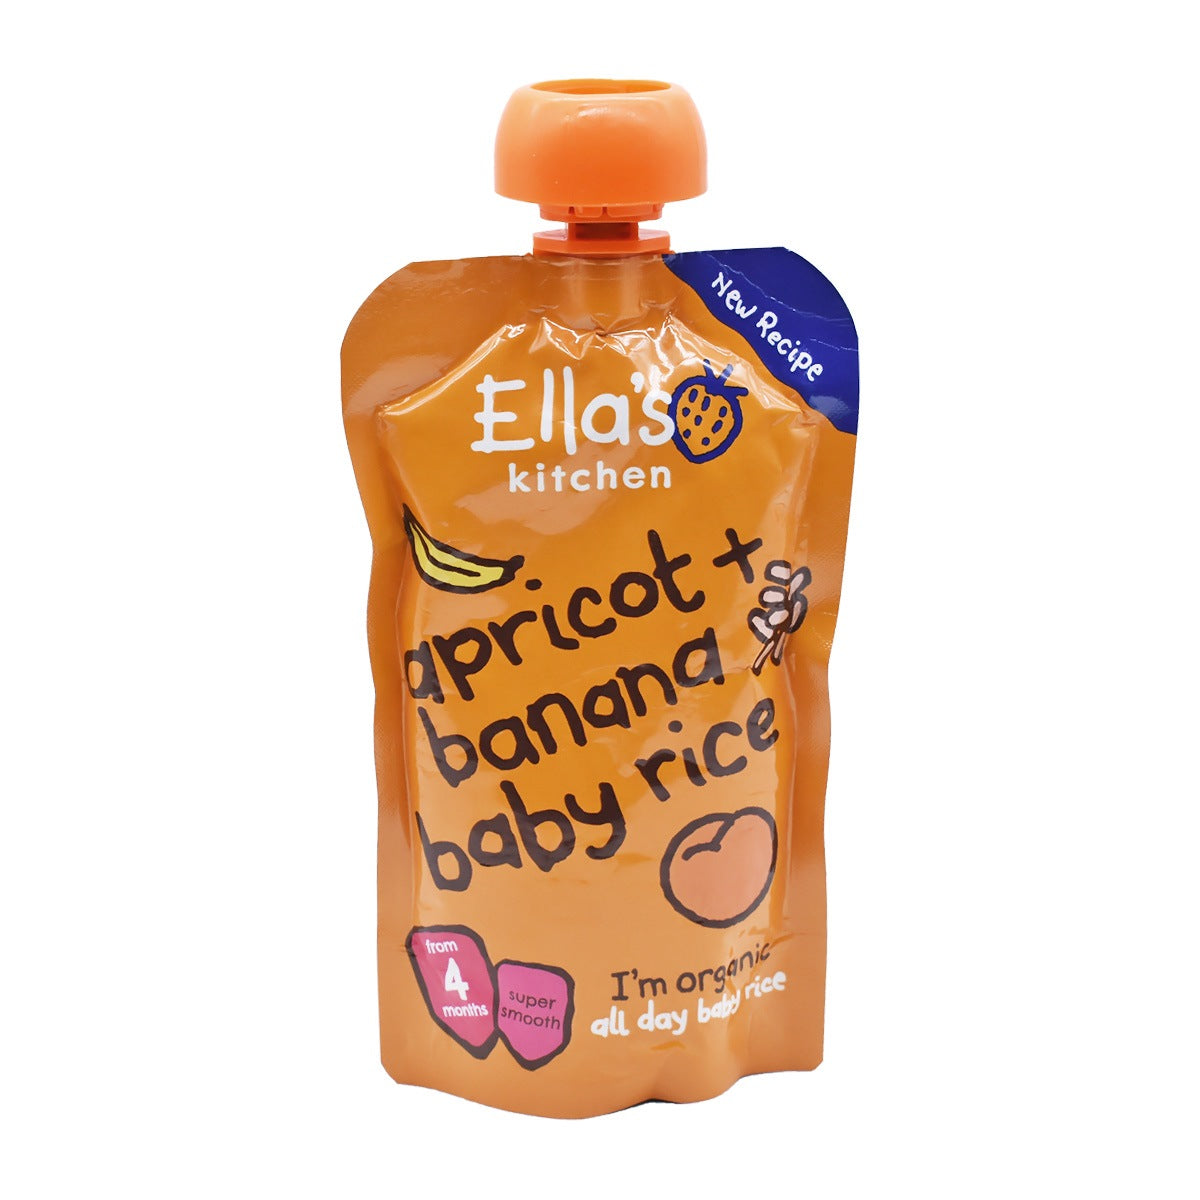 Ellas Kitchen Apricot Banana + Baby Rice - 120g